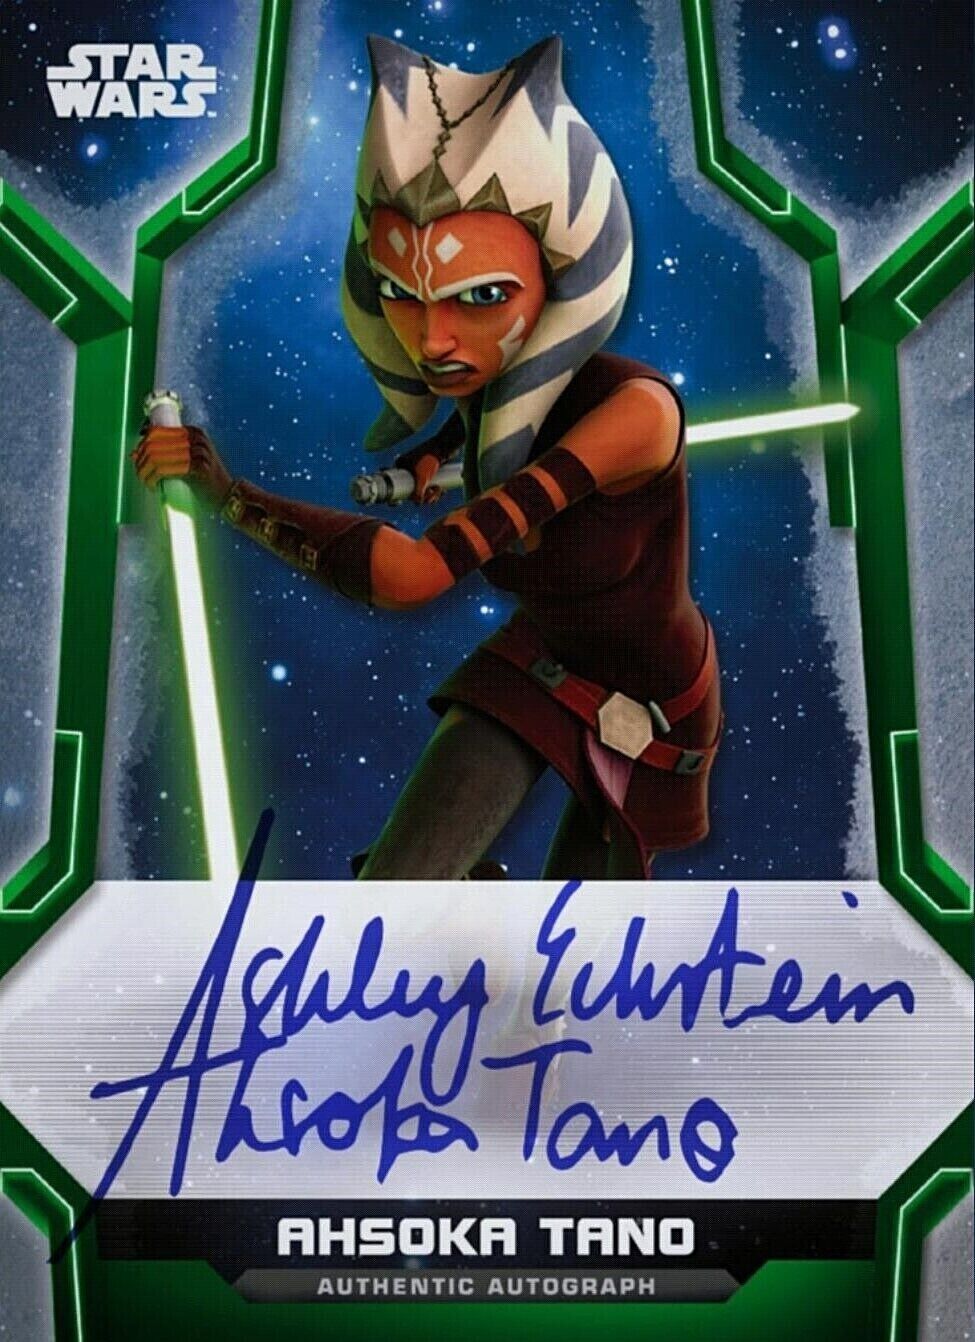 Topps Star Wars ASHLEY ECKSTEIN Authentic Autograph as AHSOKA TANO Digital Card